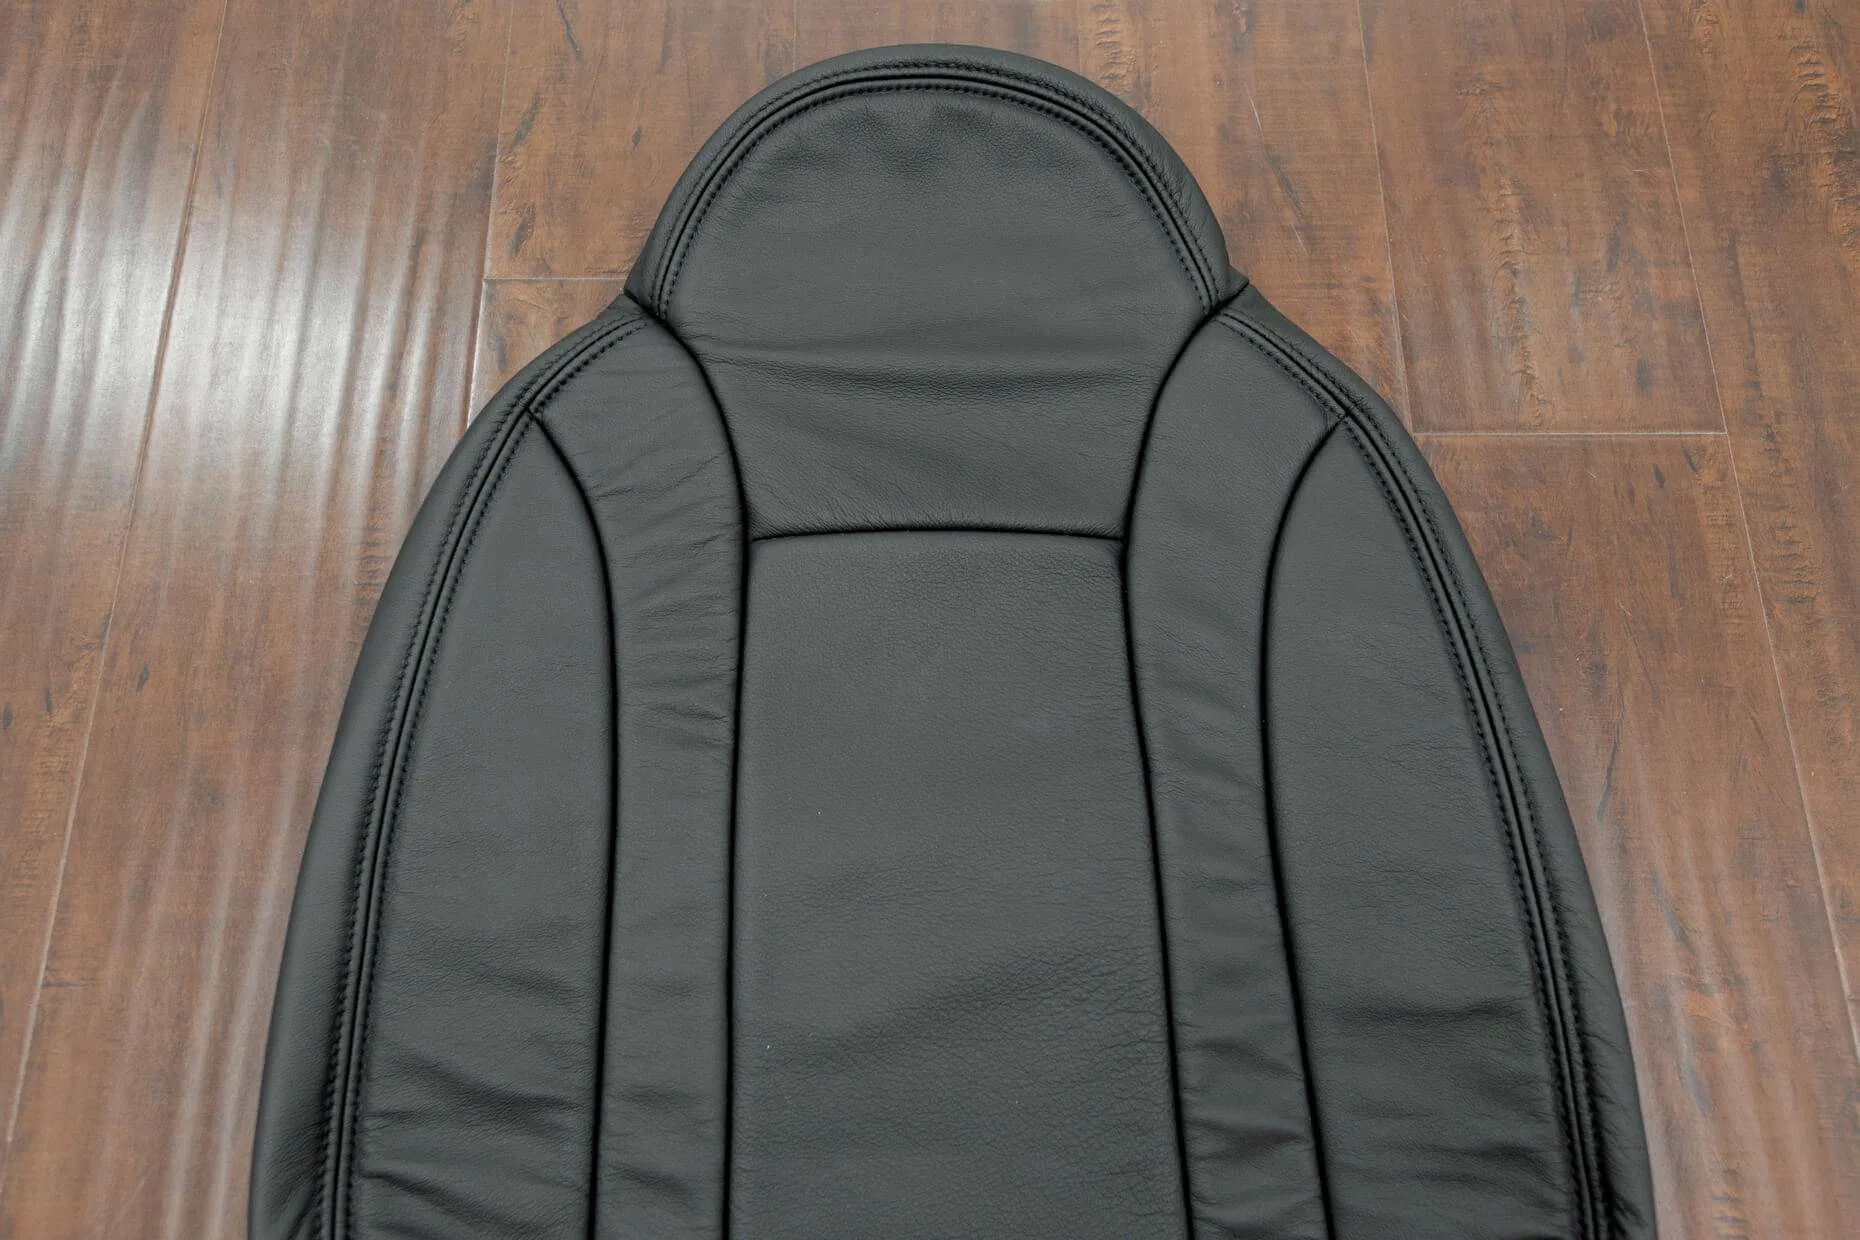 2003-2004 Dodge Dakota Leather Kit - Black - Half of backrest